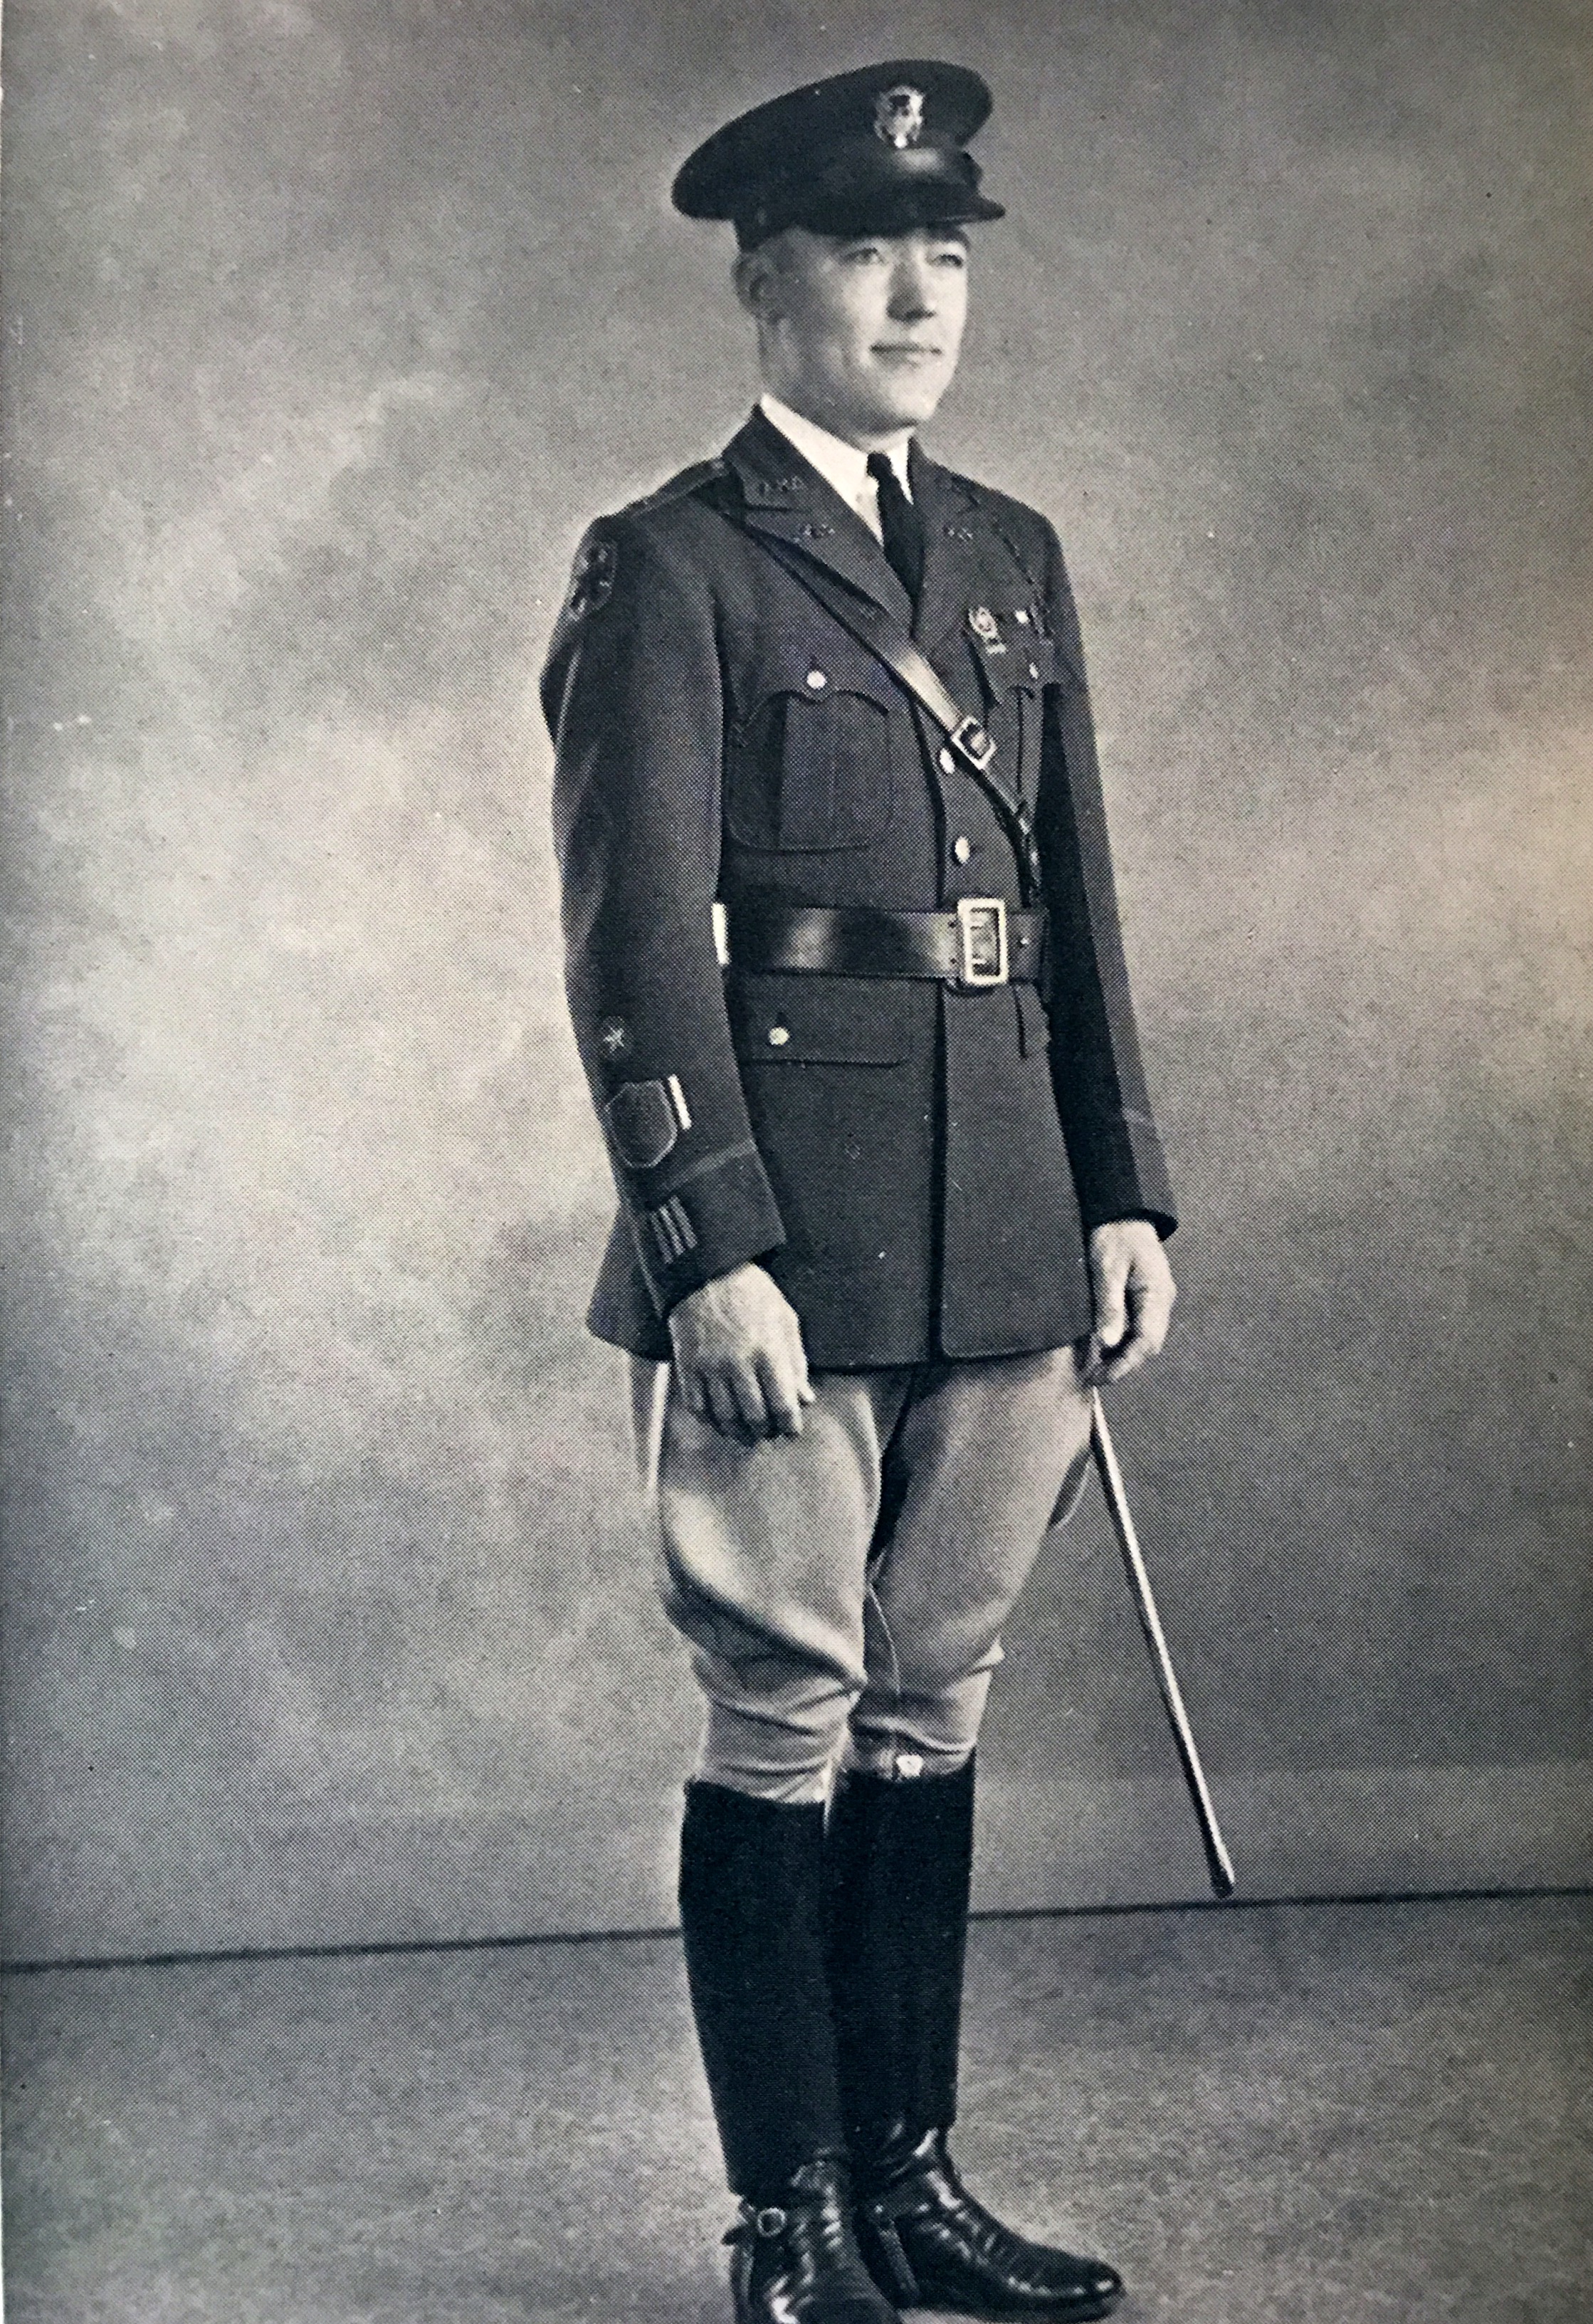 Battalion commander Texas A&M. 1935. Albert Gordon Nichols